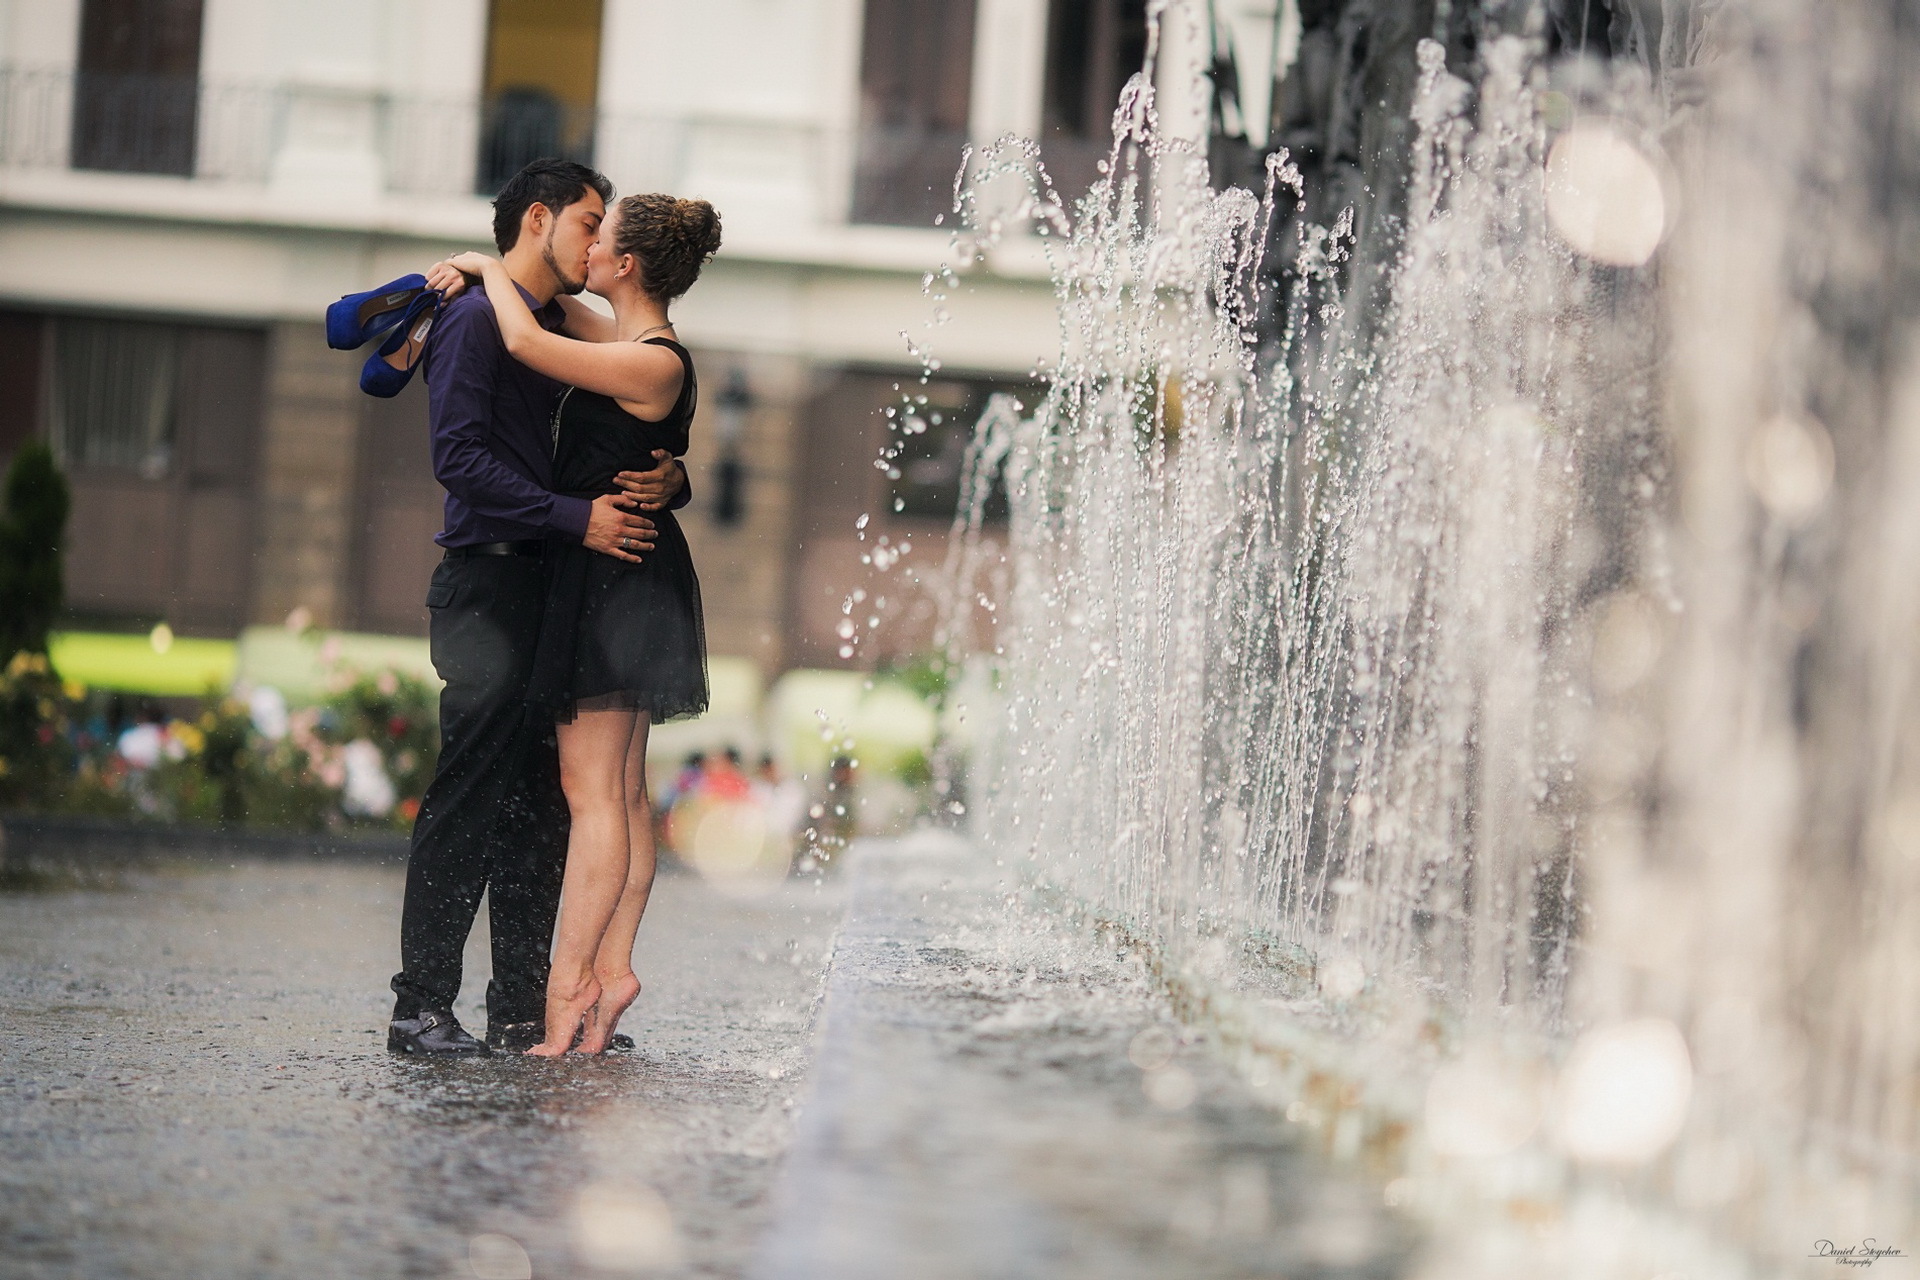 Love Romance Cuple Kiss Embrace Hug Drops Fountain Mood